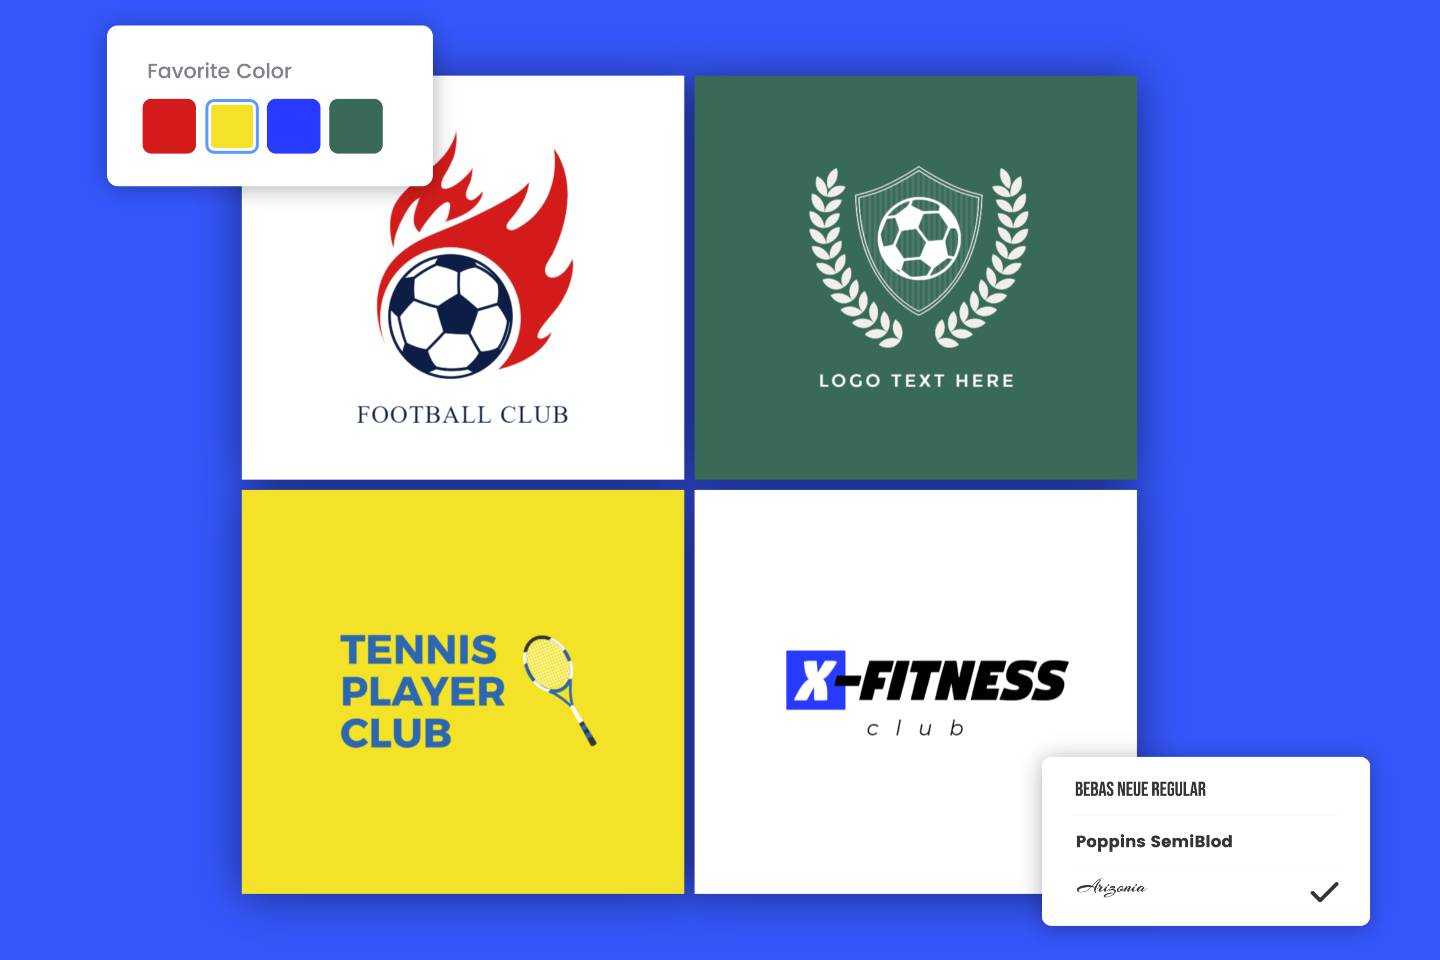 Football logo, tennis player club logo, and fitness logo templates